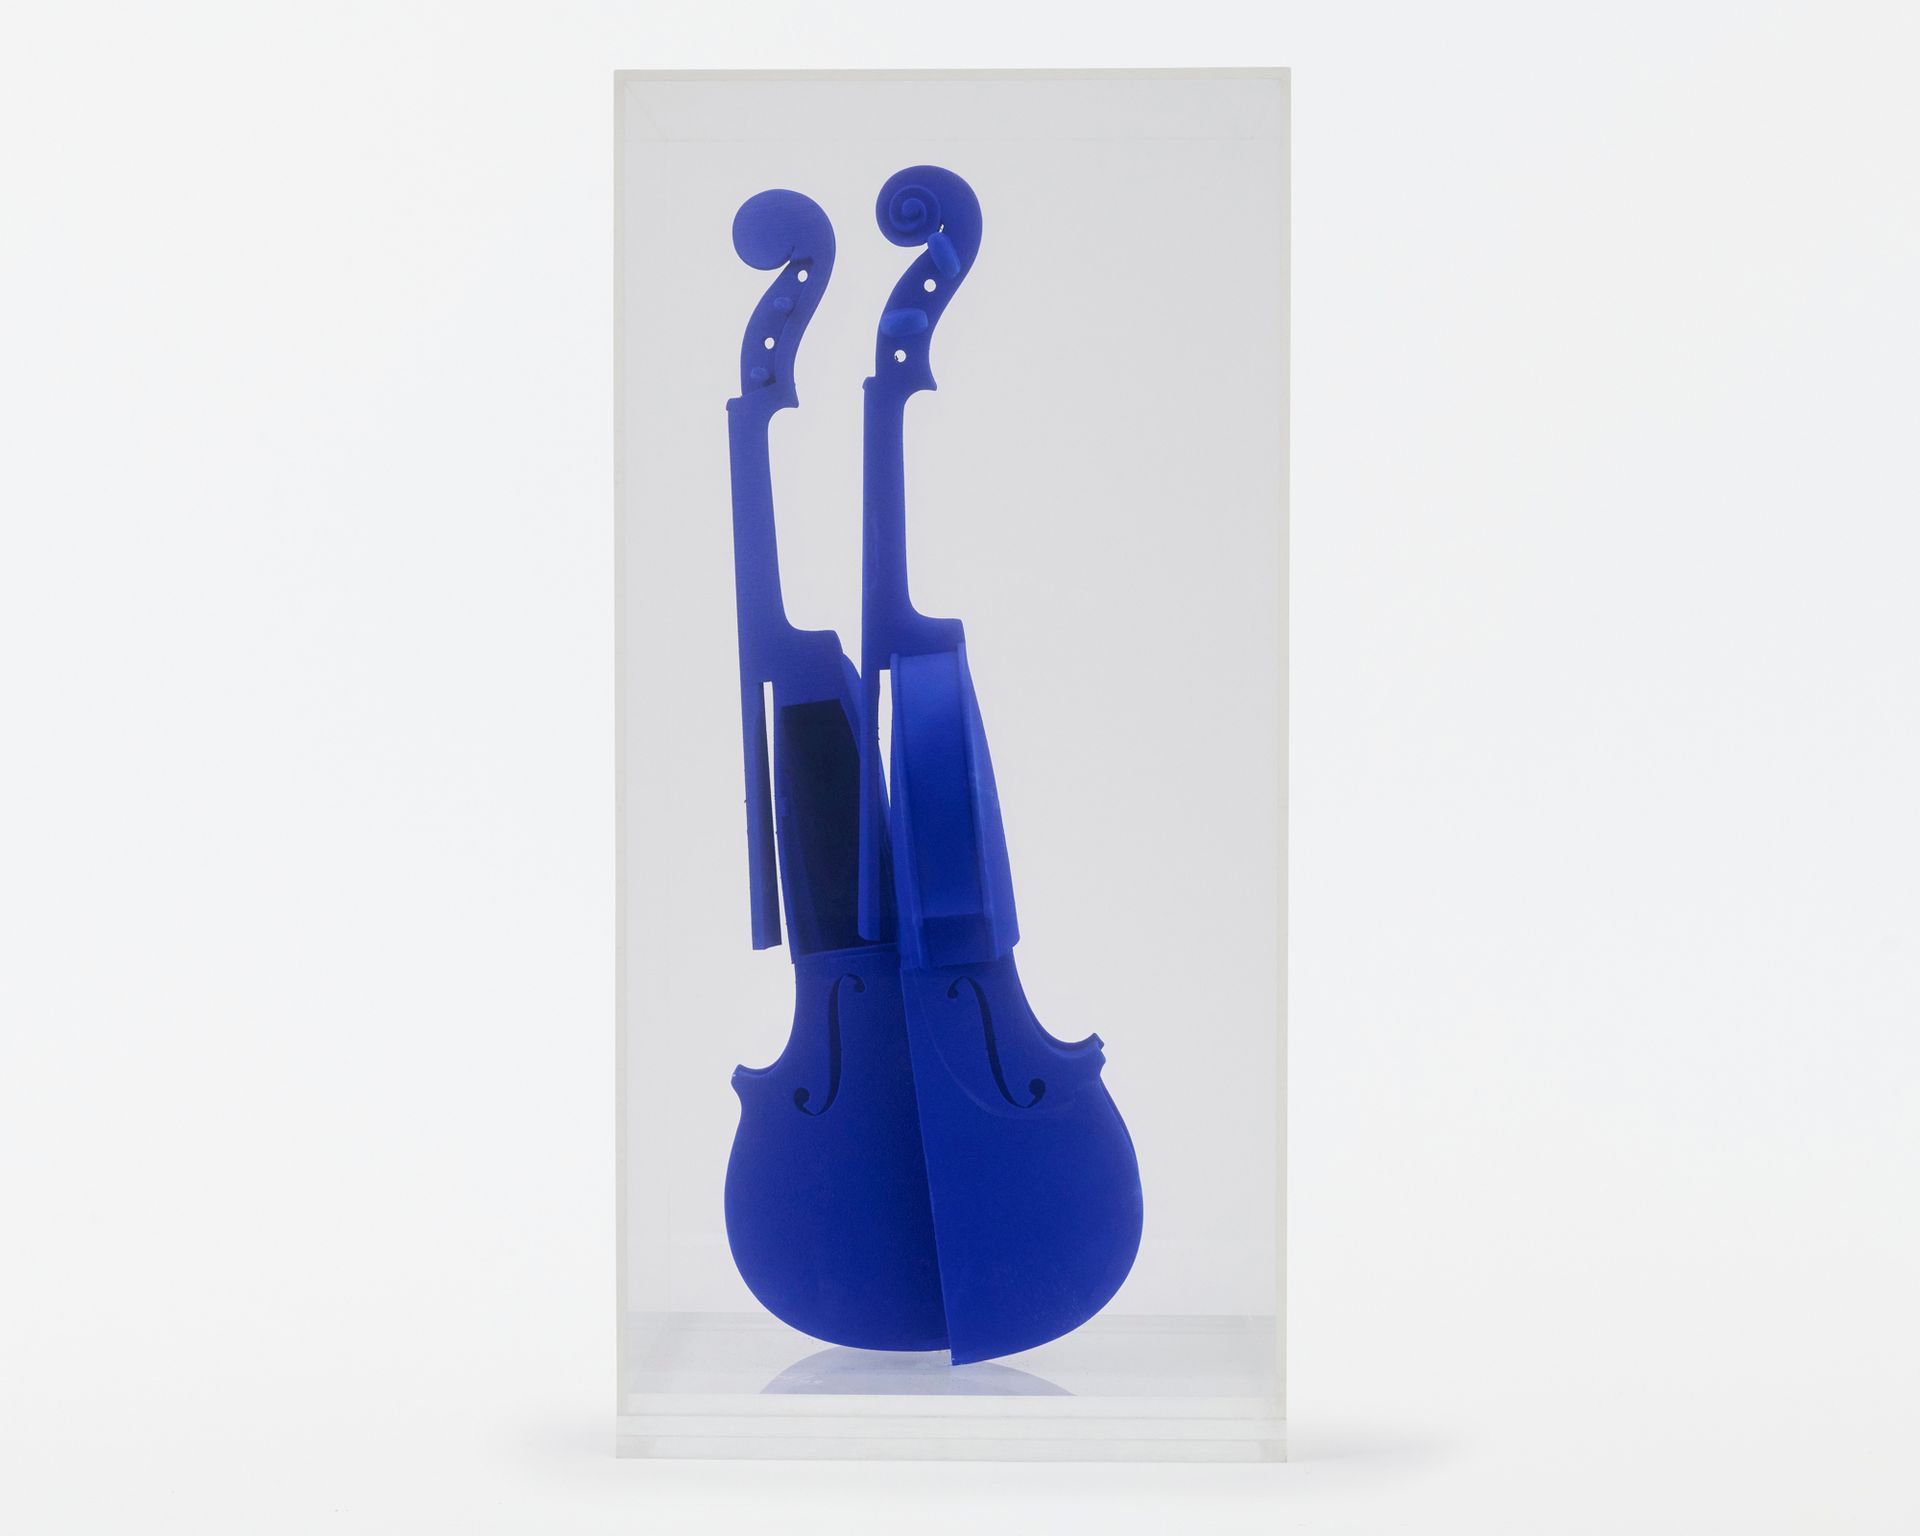 Null 阿尔曼 (1928 - 2005)
向伊夫-克莱因致敬
木制小提琴和蓝色颜料
切割出的有机玻璃
在有机玻璃中。
签名并编号为76/99
在有机玻璃上。&hellip;